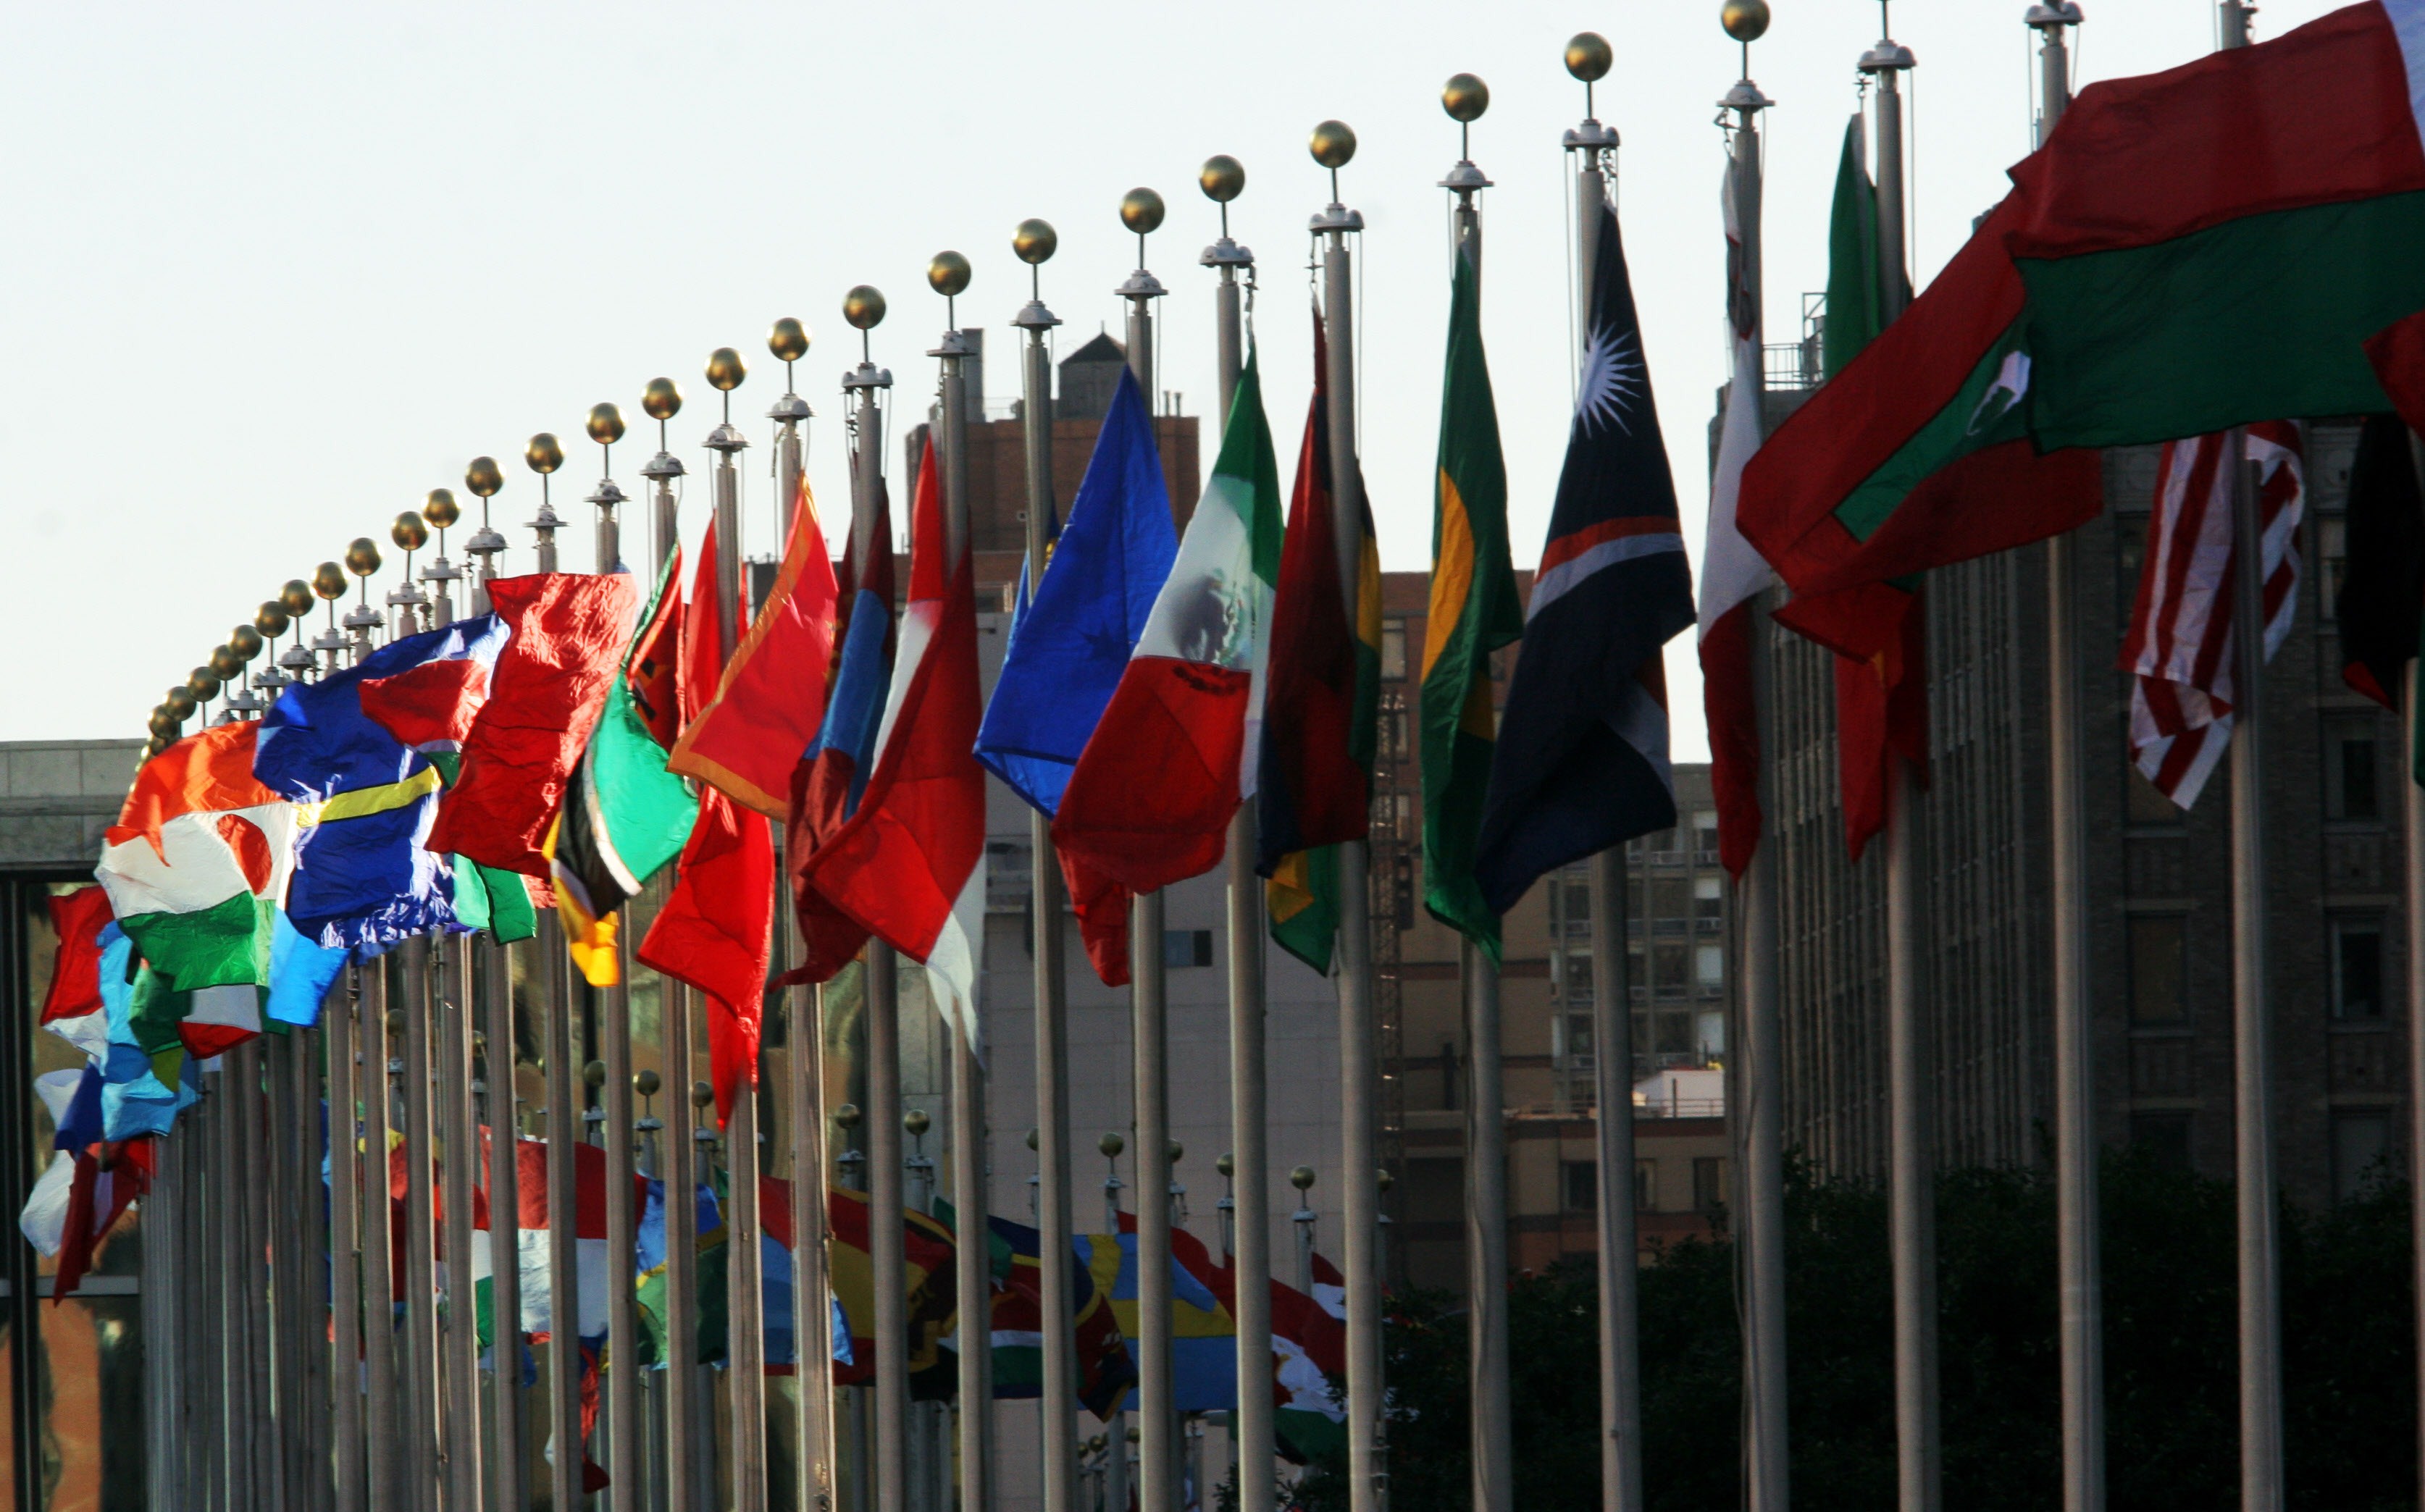 Членство оон. Флаги возле здания ООН. Государства ООН. Флаги государств ООН. Флаги членов ООН.